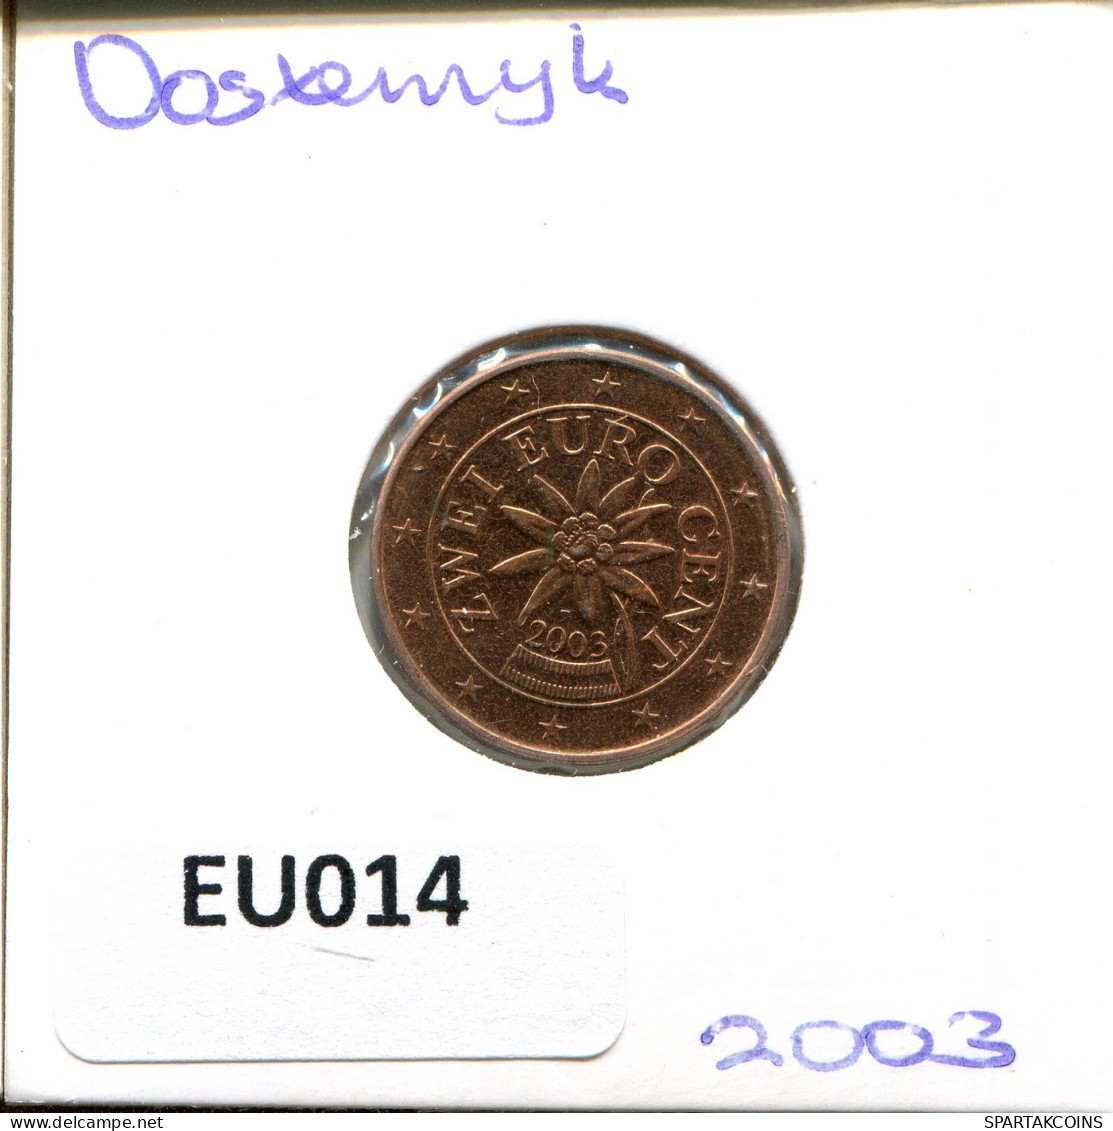 2 EURO CENTS 2003 ÖSTERREICH AUSTRIA Münze #EU014.D.A - Oostenrijk